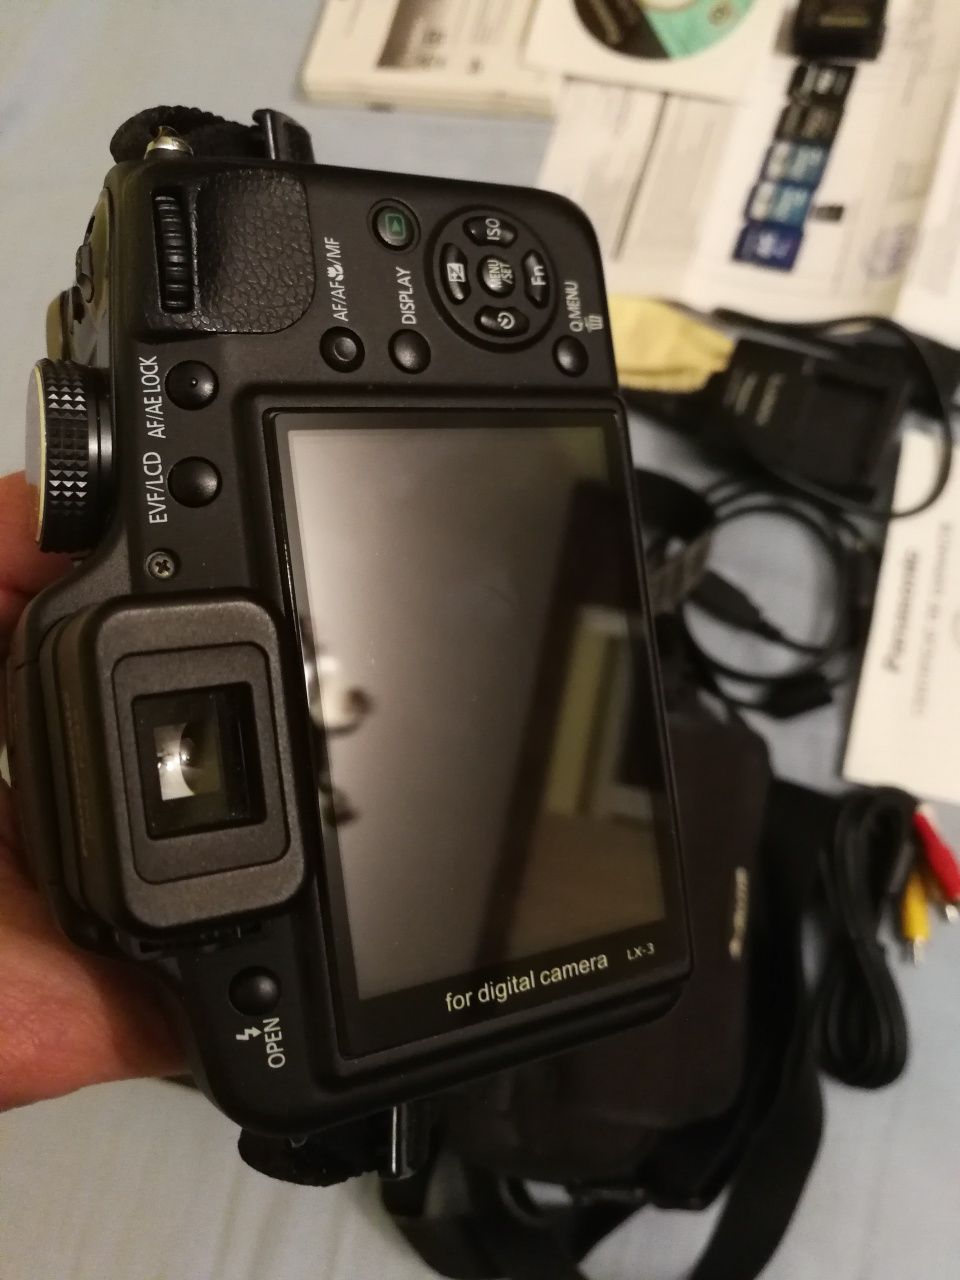 Aparat foto Panasonic Lumix FZ45 fabricat în Japonia cu accesorii